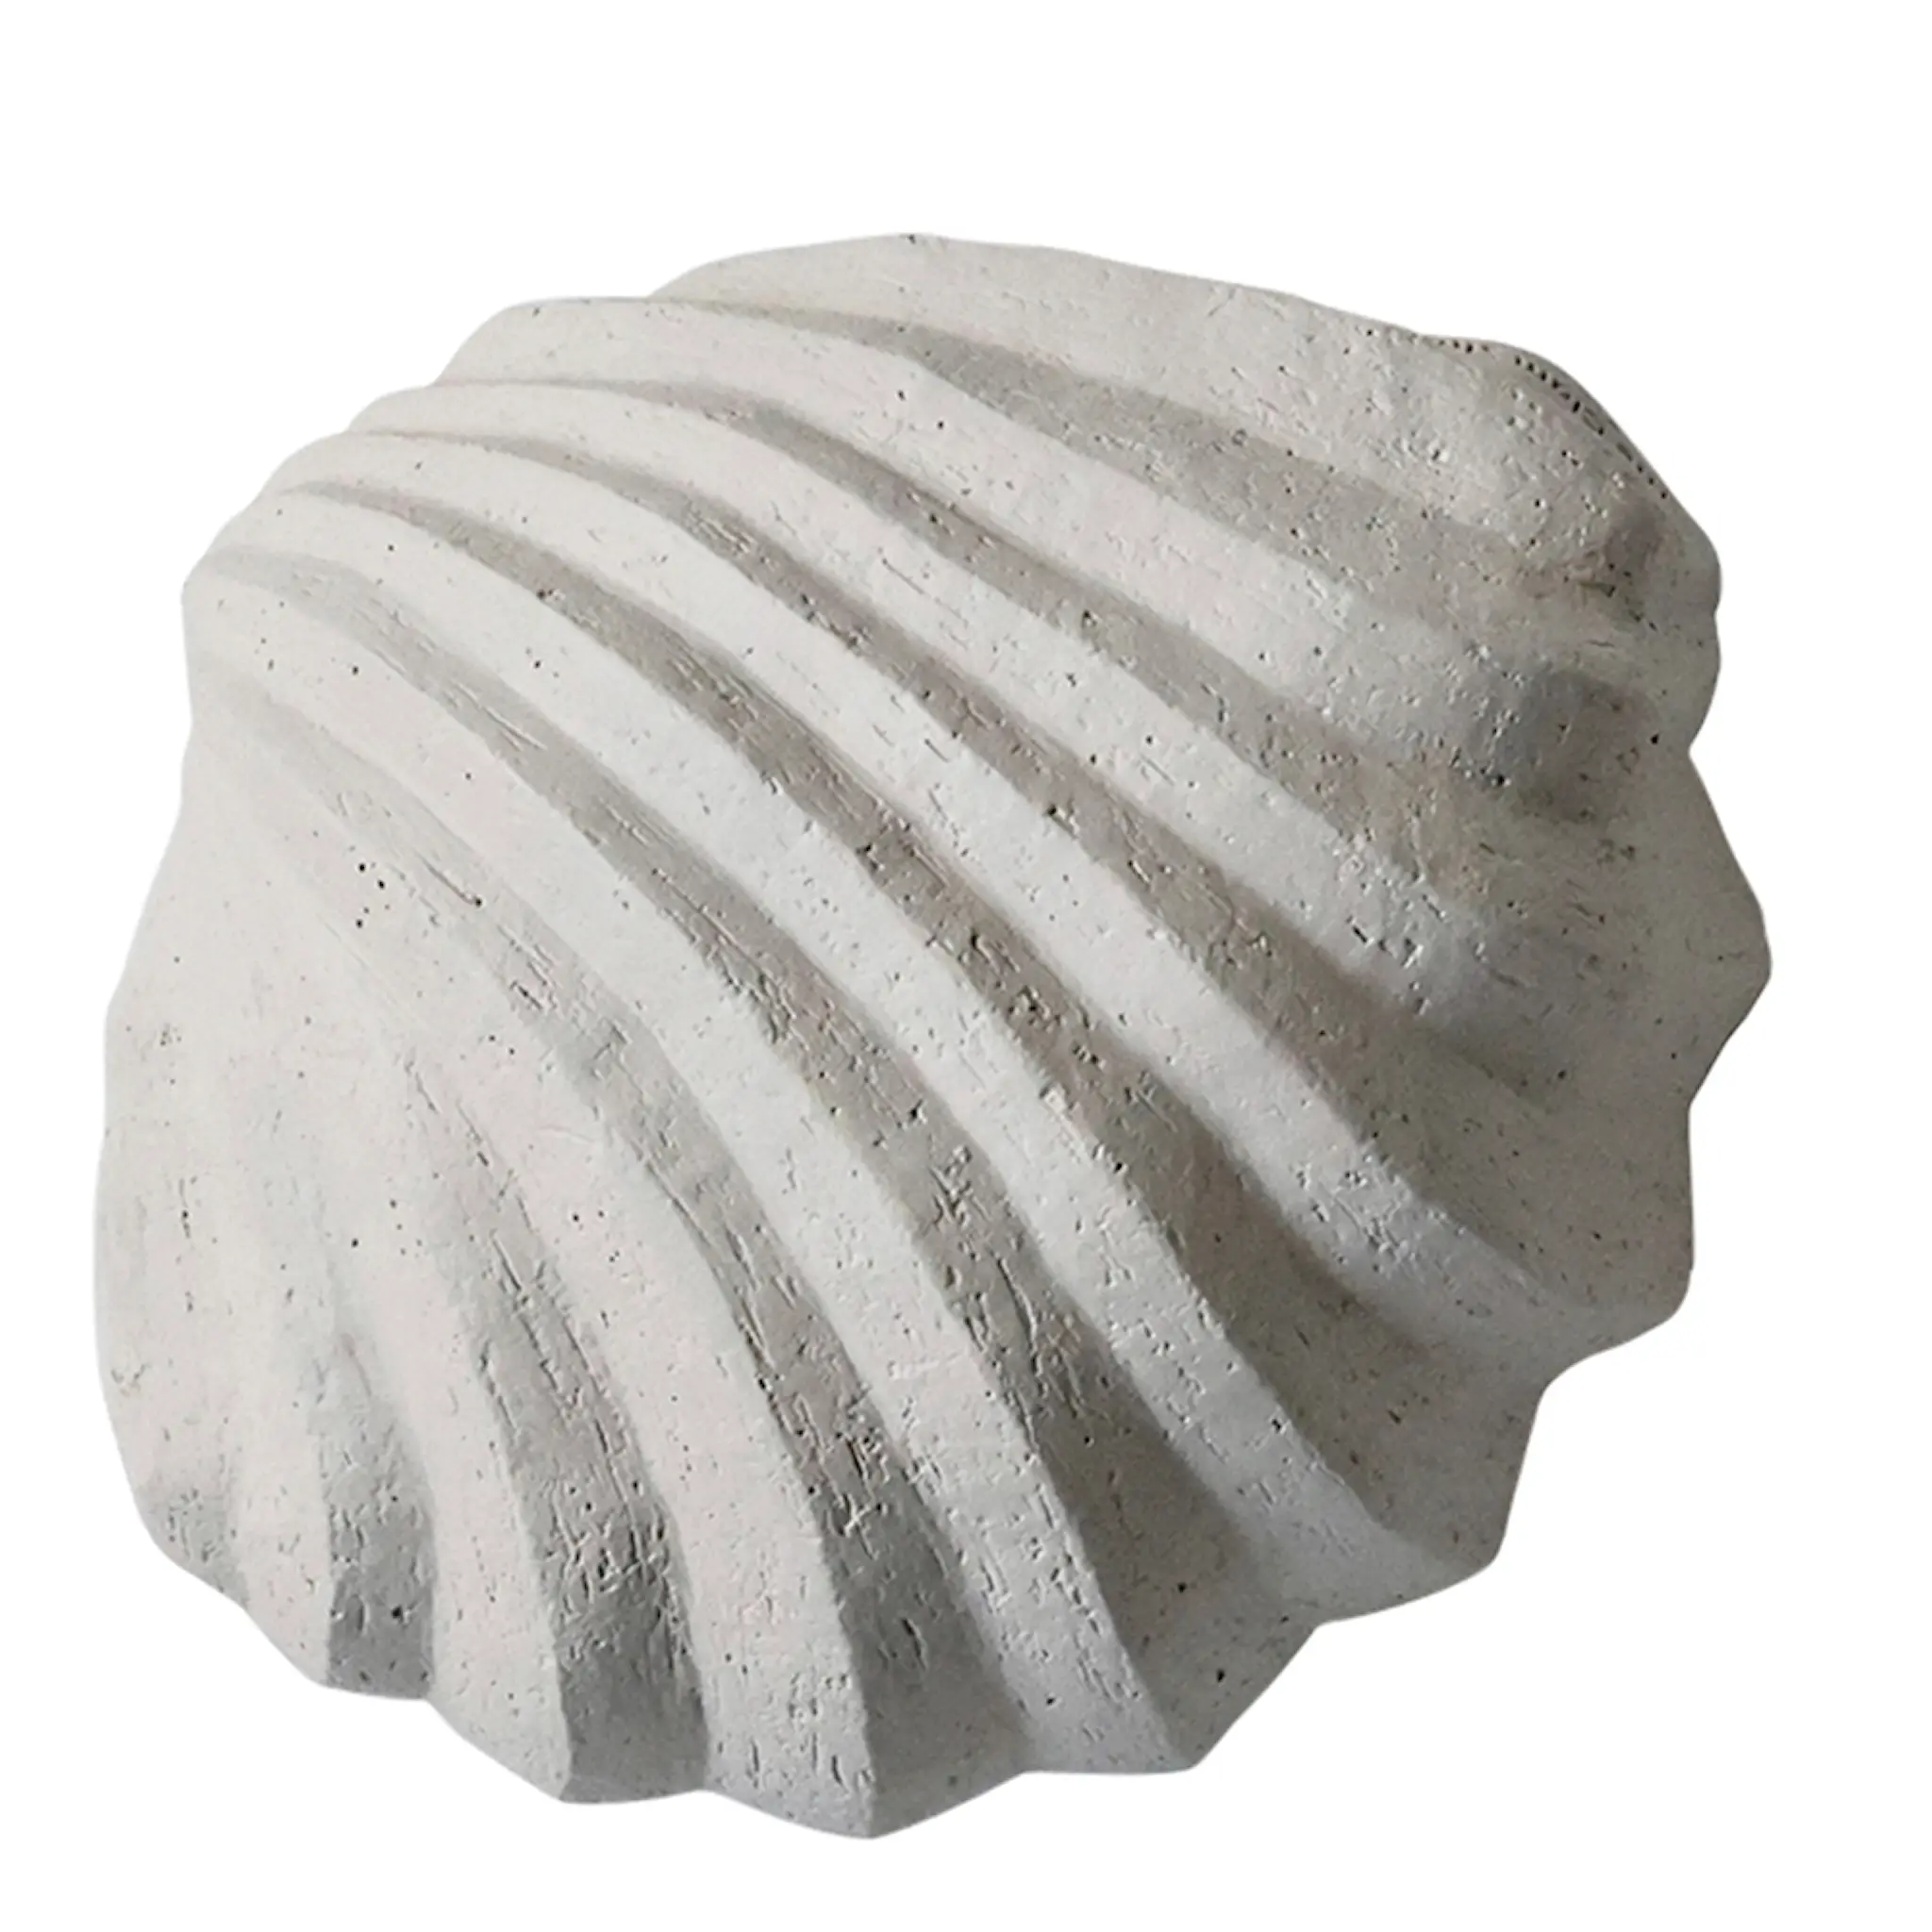 Cooee The Clam Shell Veistos Limestone